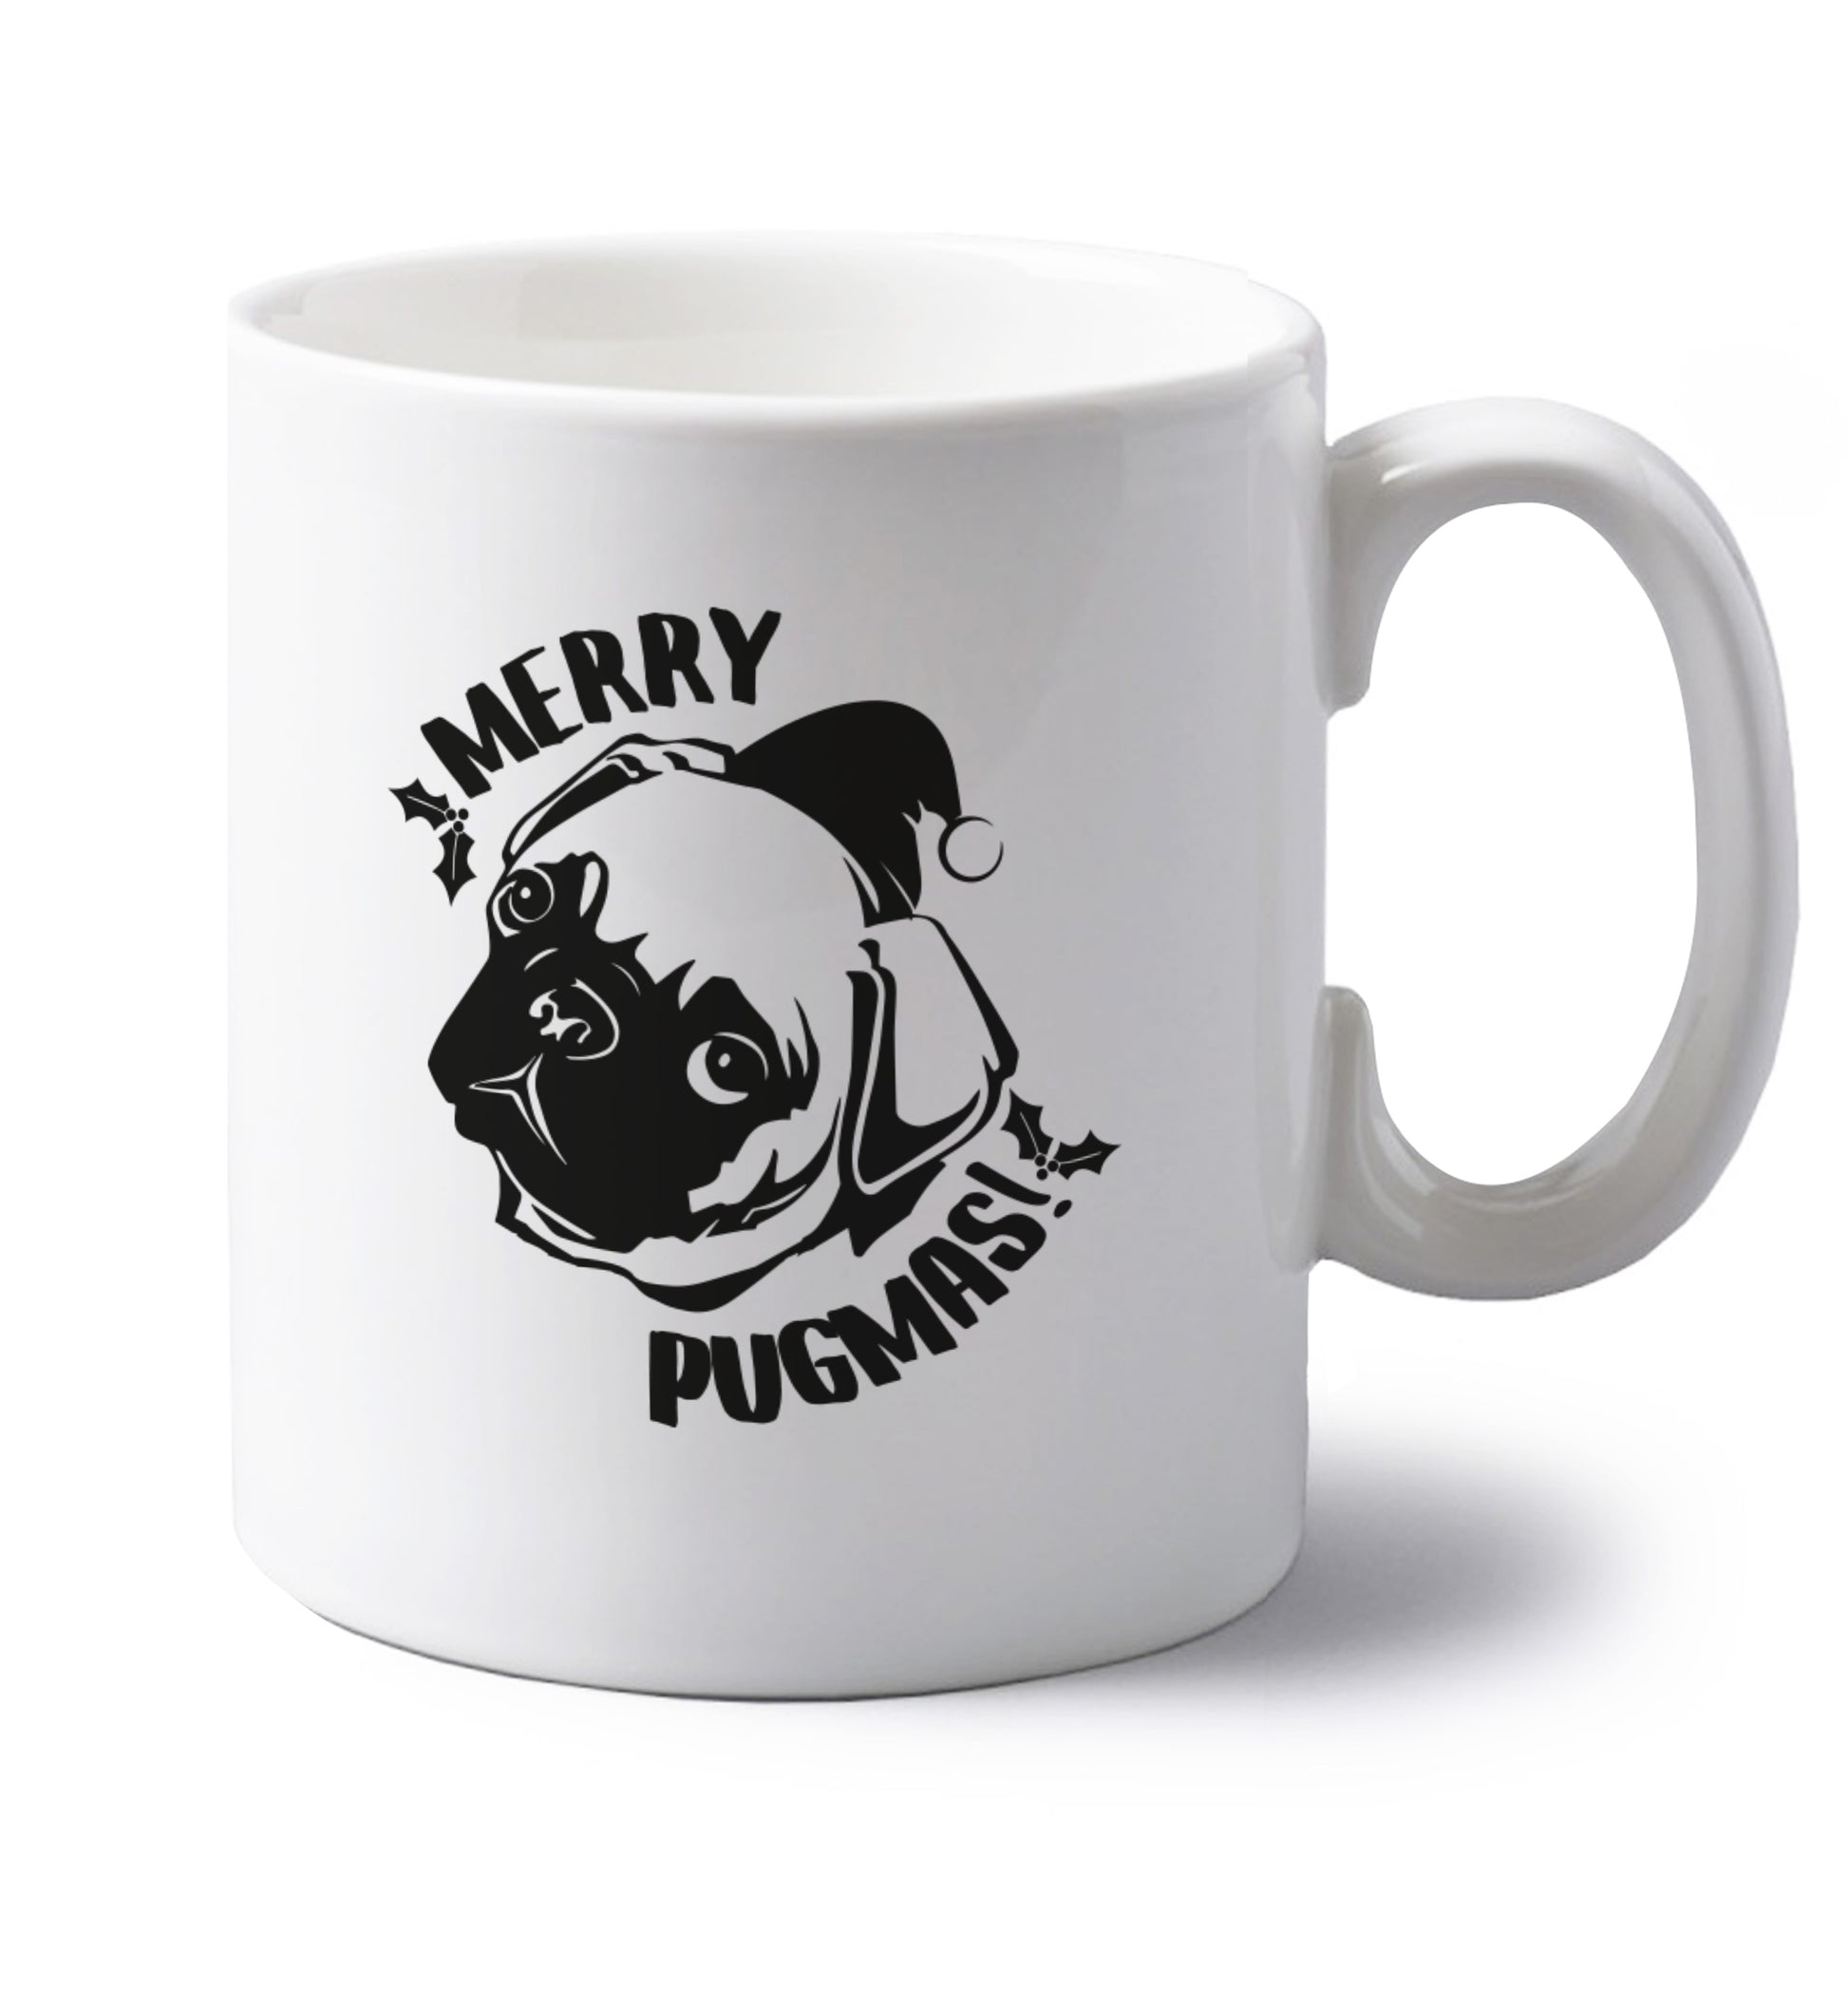 Merry Pugmas left handed white ceramic mug 